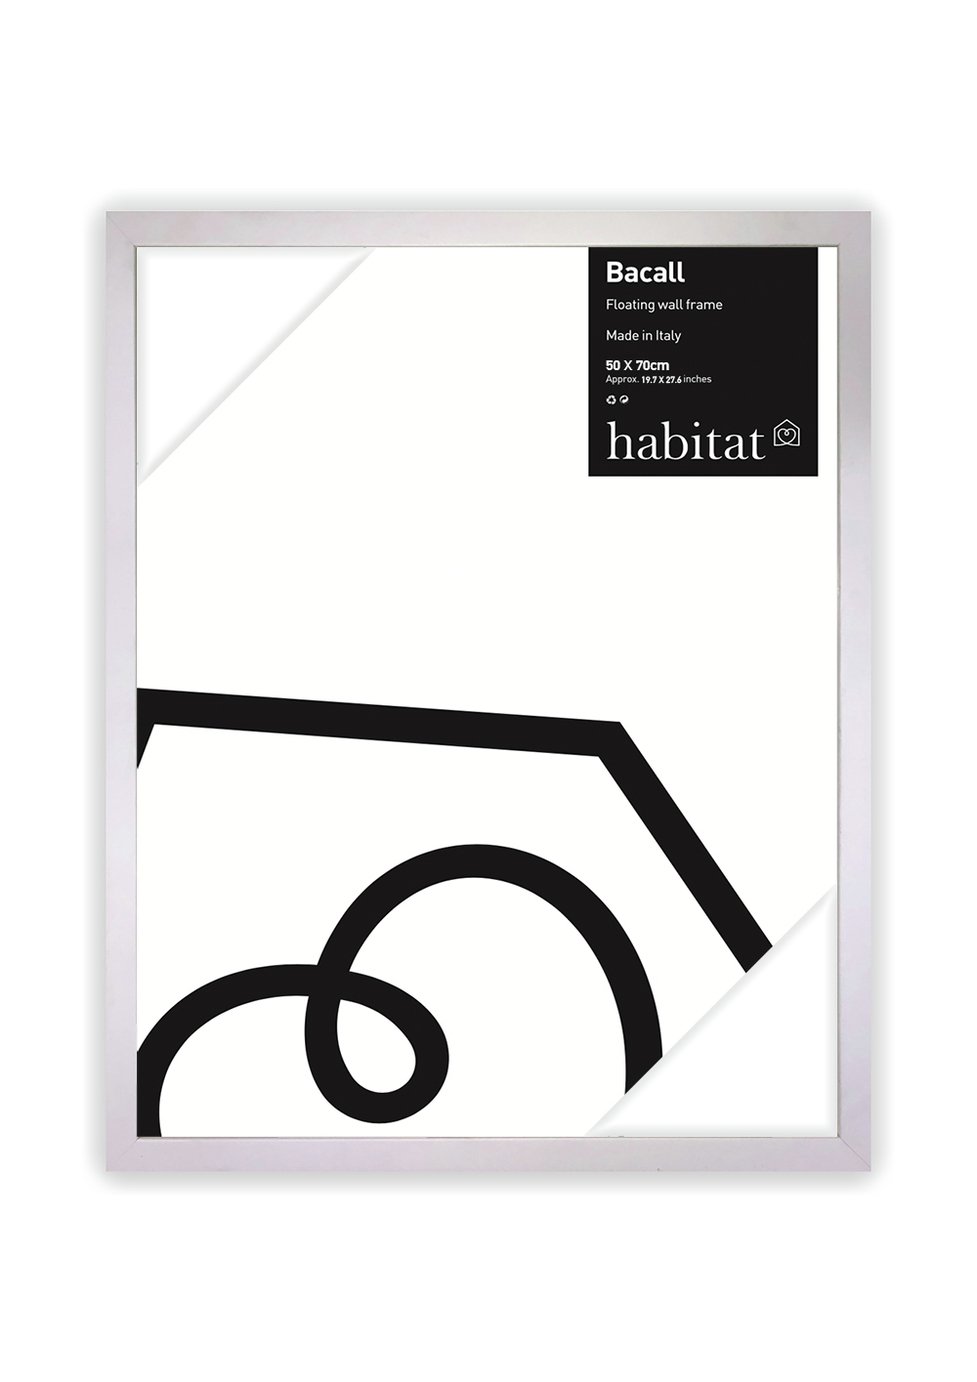 Habitat Bacall 50x70cm Wall Frame - White Gloss